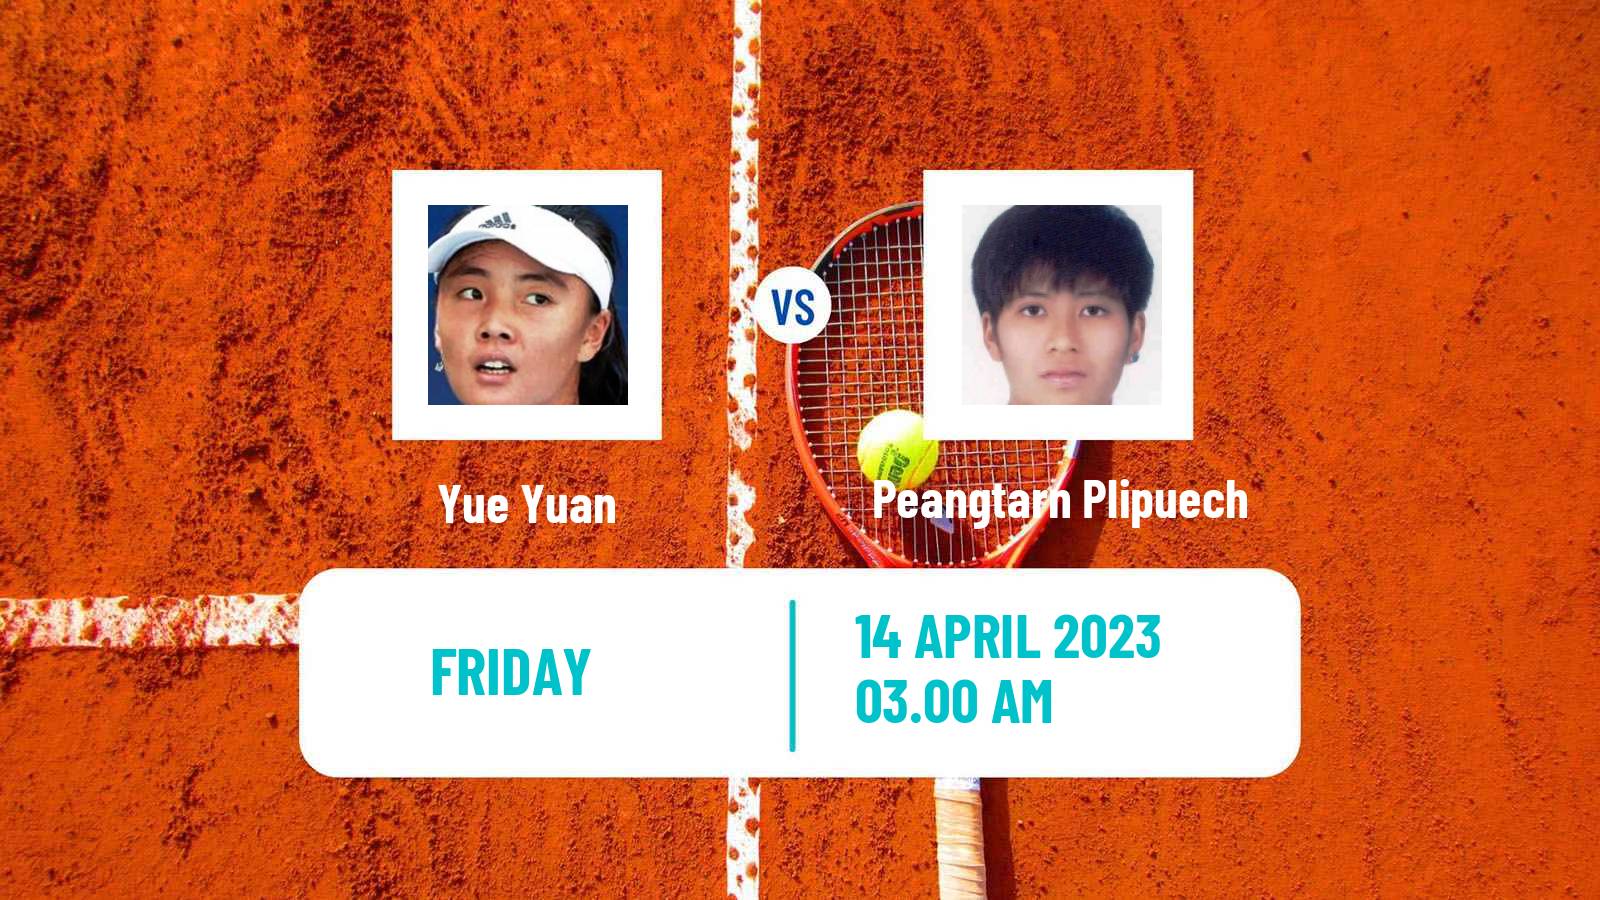 Tennis WTA Billie Jean King Cup Group I Yue Yuan - Peangtarn Plipuech